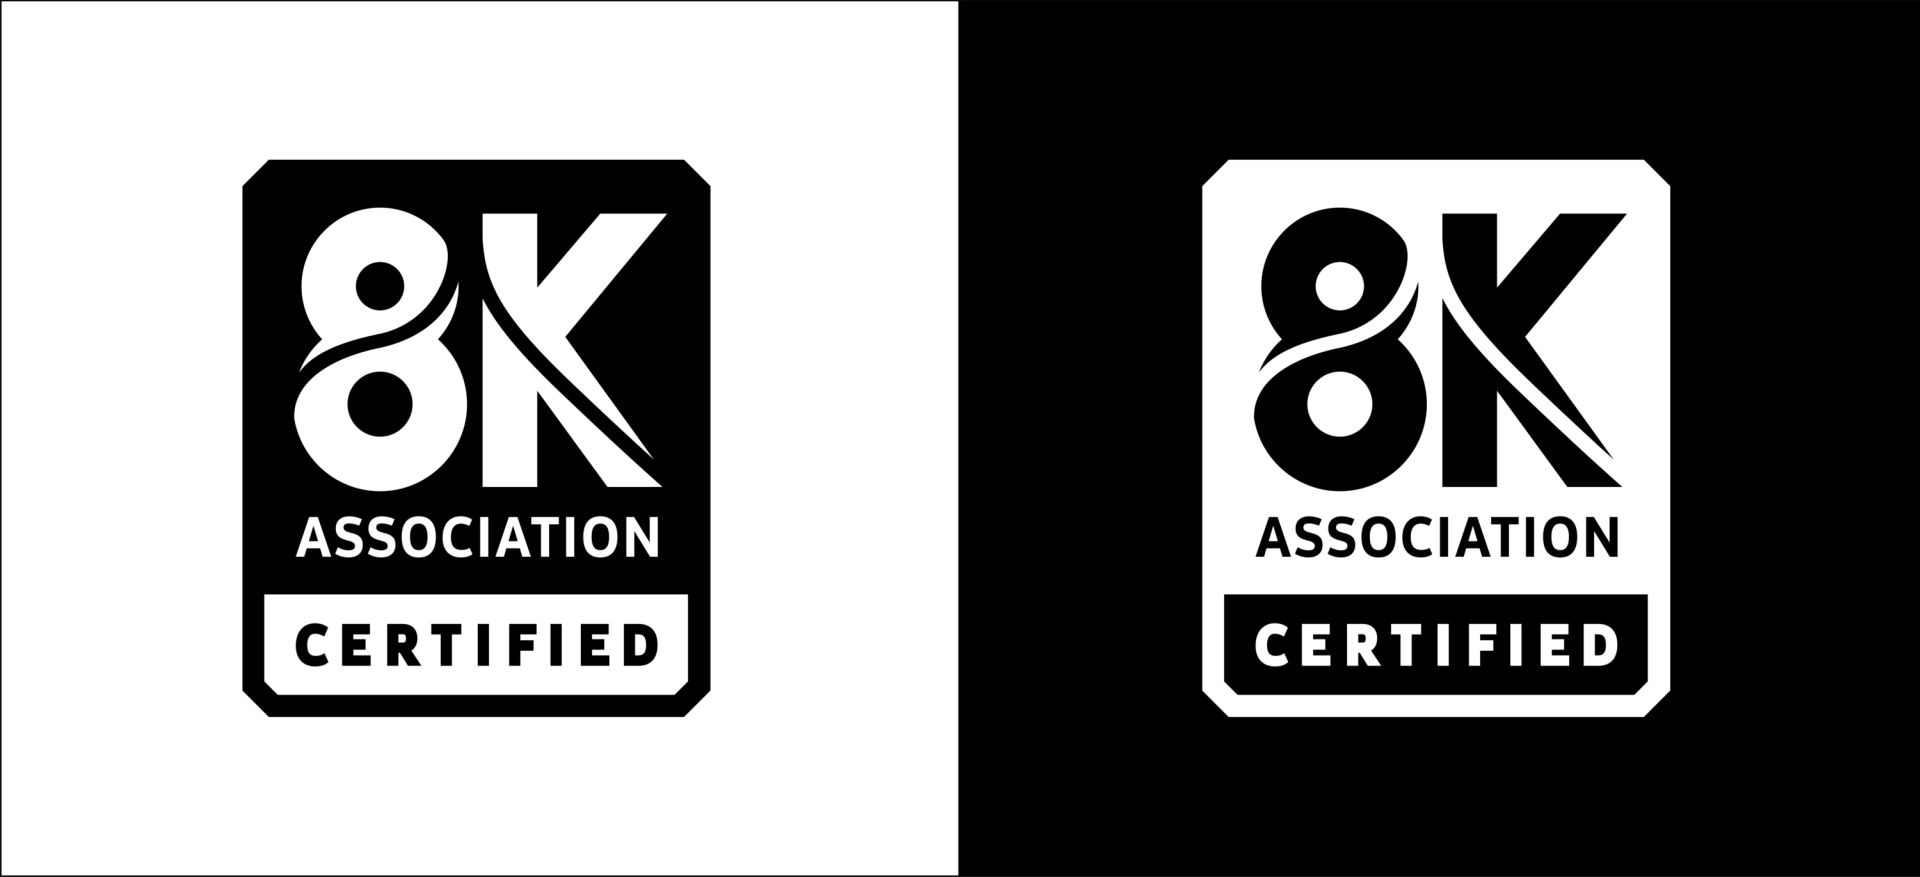 8K Association Certified Logo